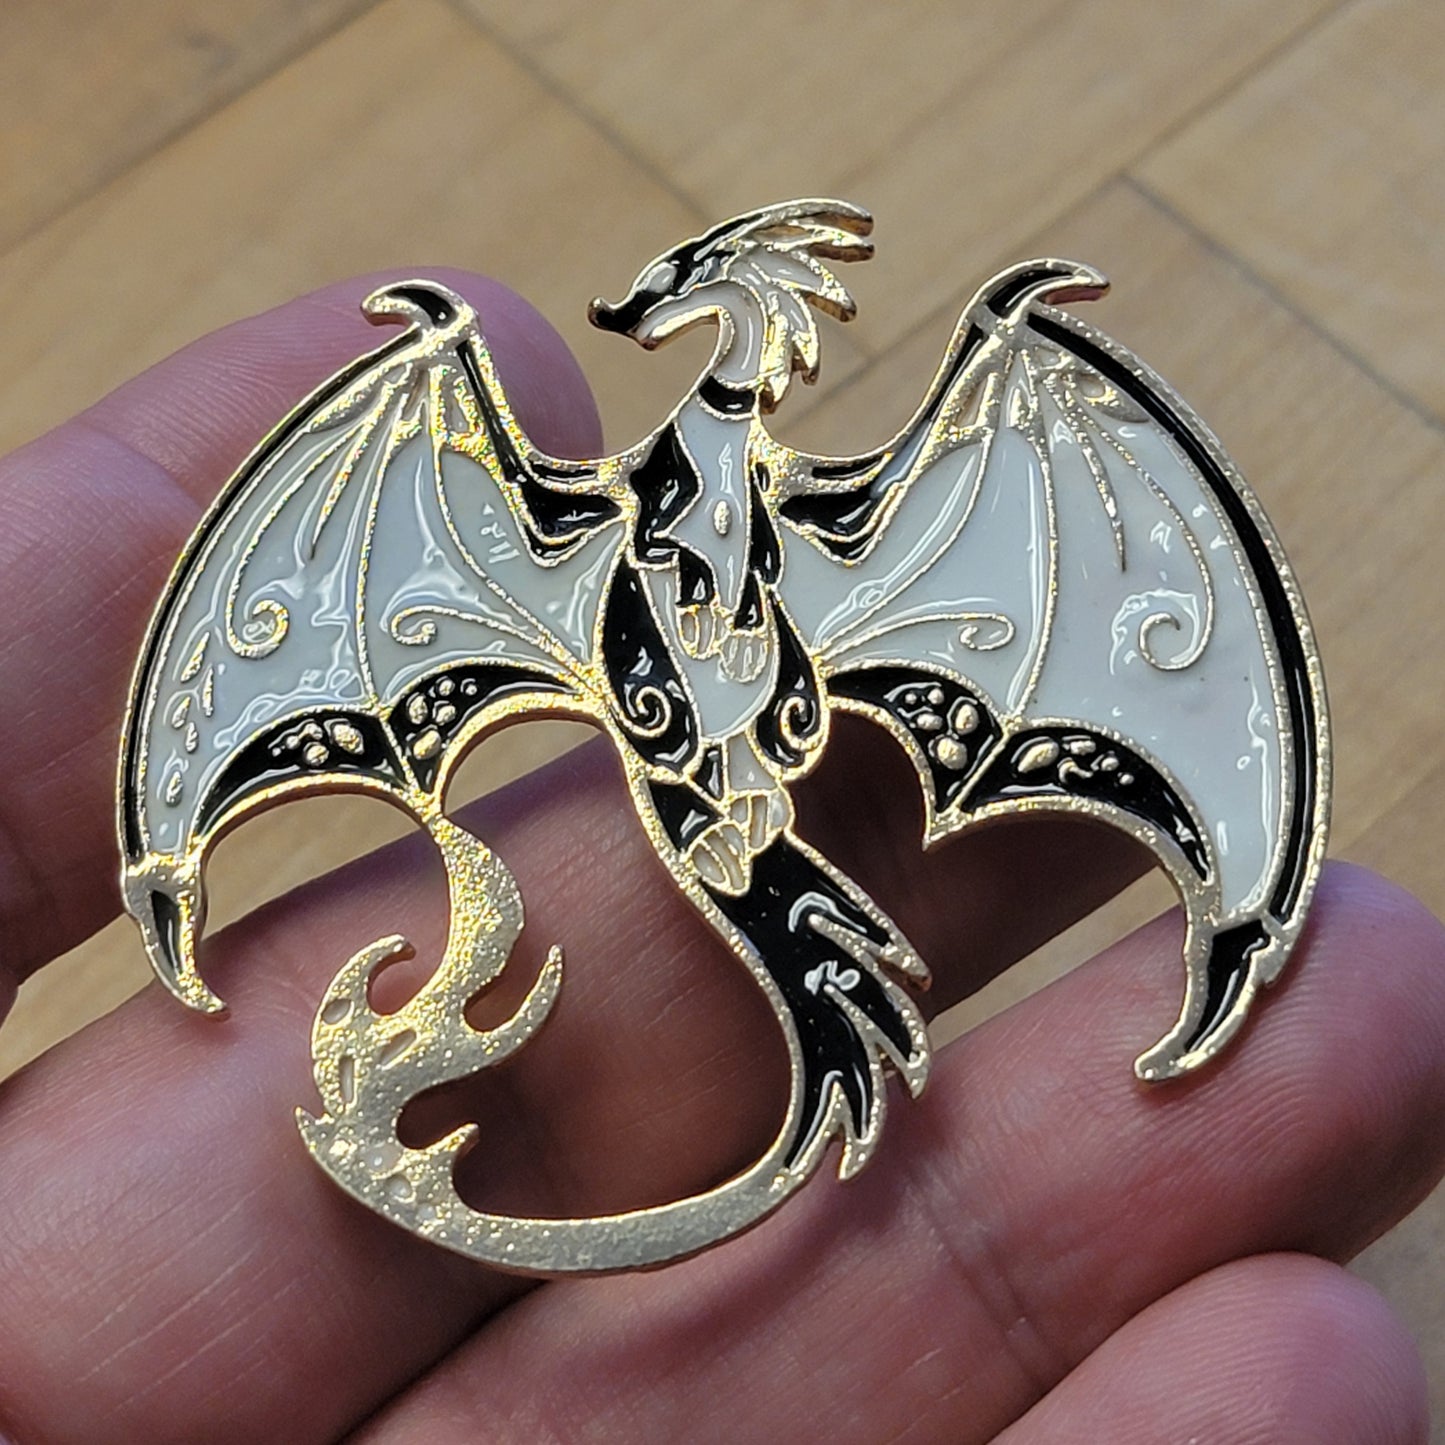 Sky Dragon Enamel Pin Metal Gothic Style Brooch